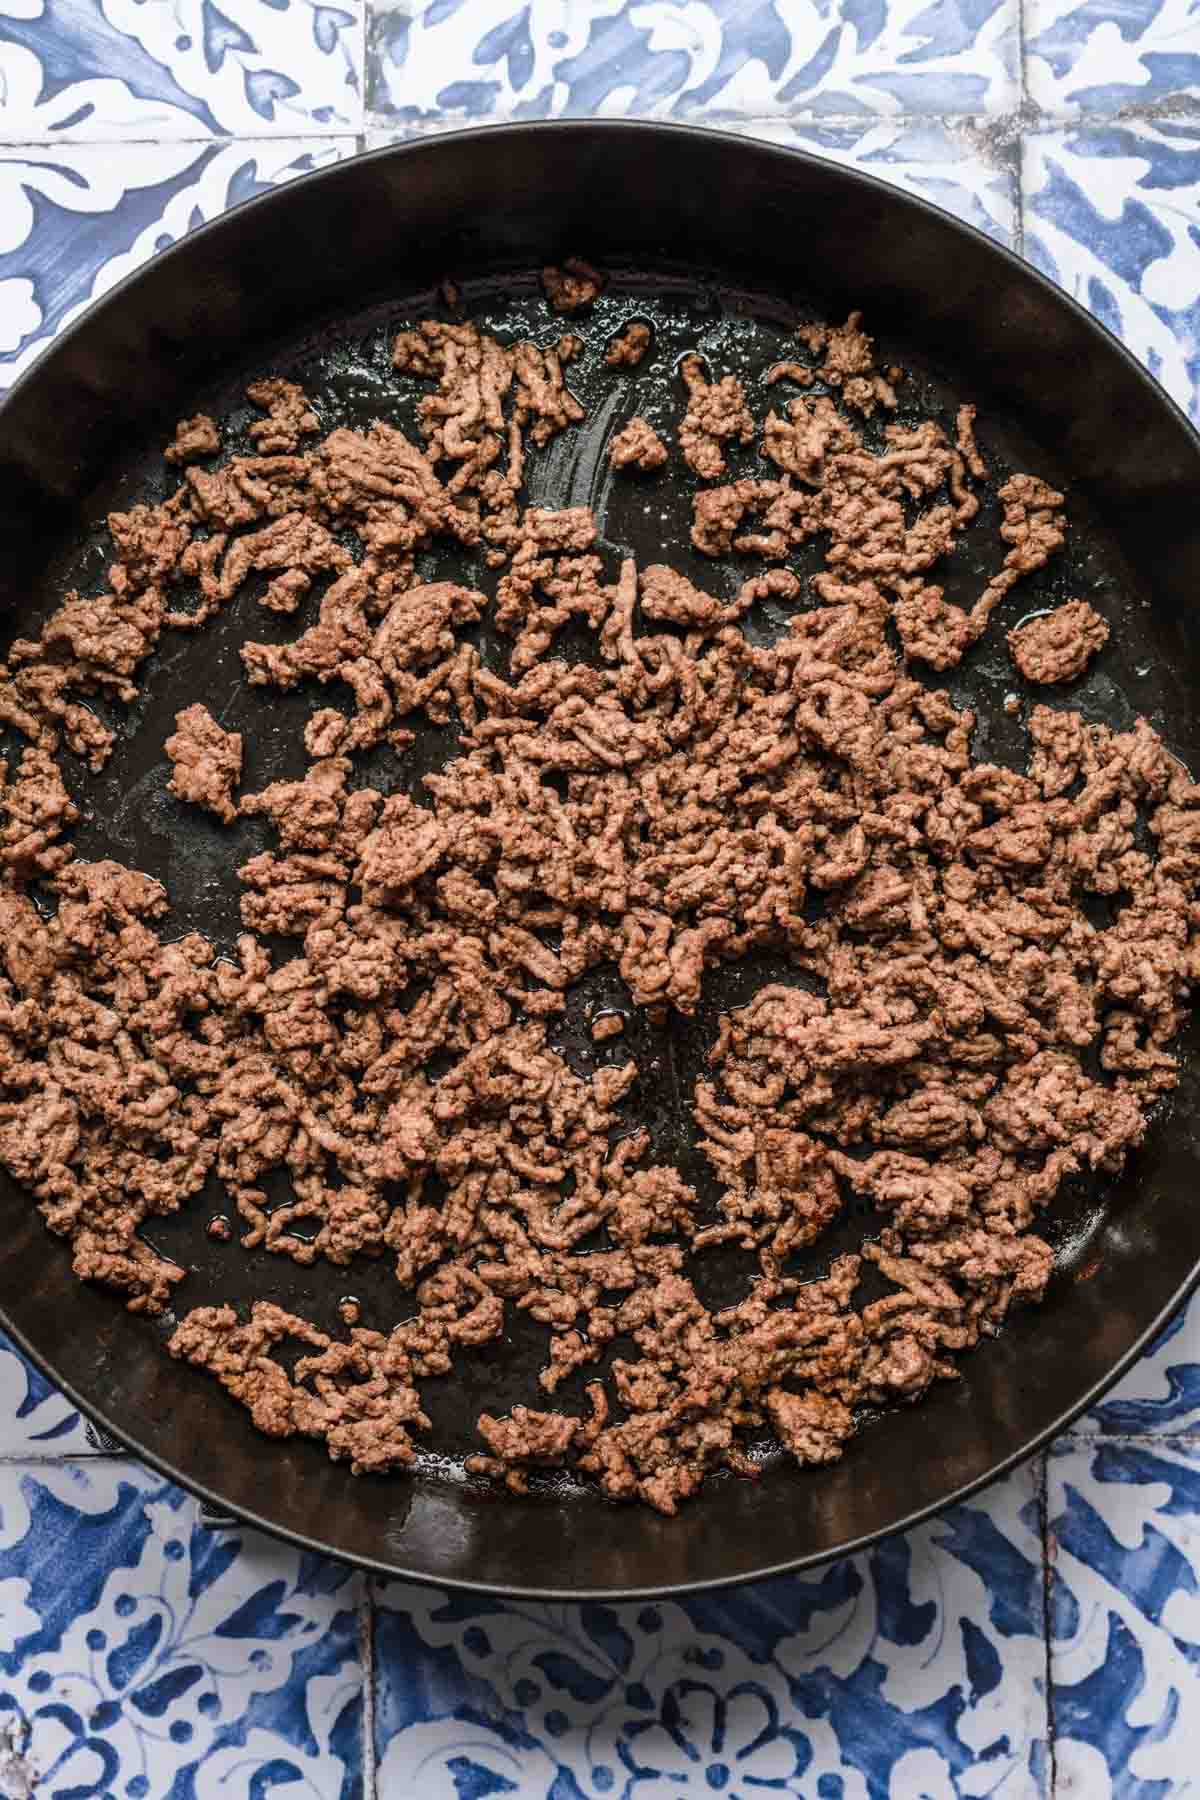 Spanish Beef & Rice Skillet ingredients in cooking pan